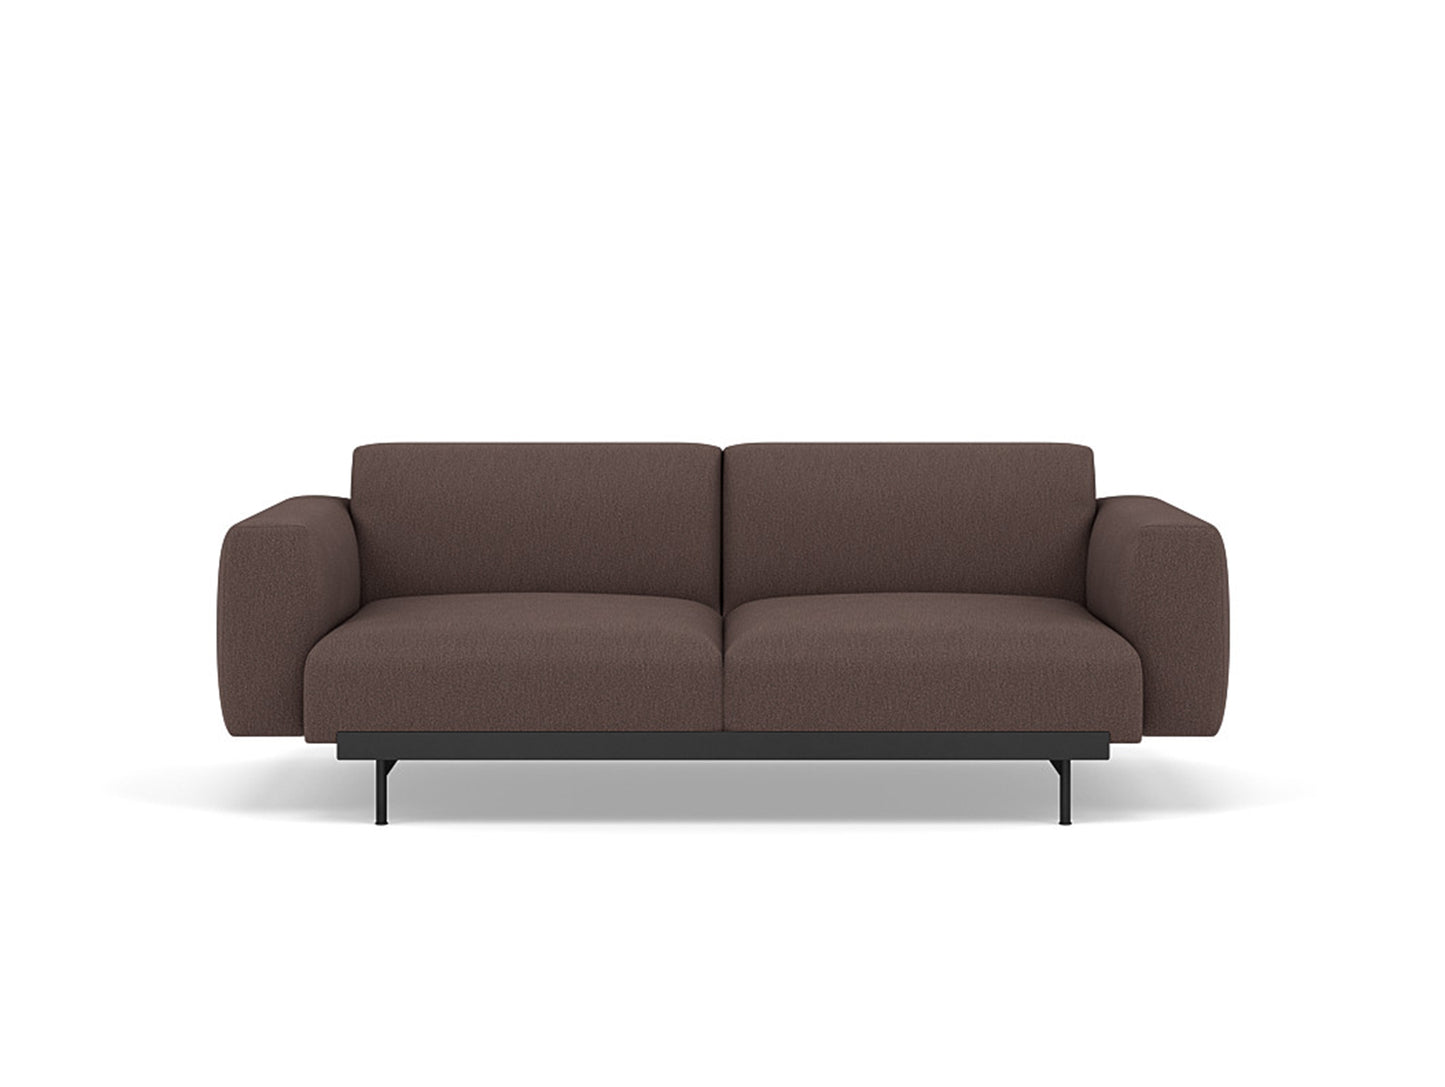 In Situ 2-Seater Modular Sofa by Muuto - Configuration 1 / Clay  6